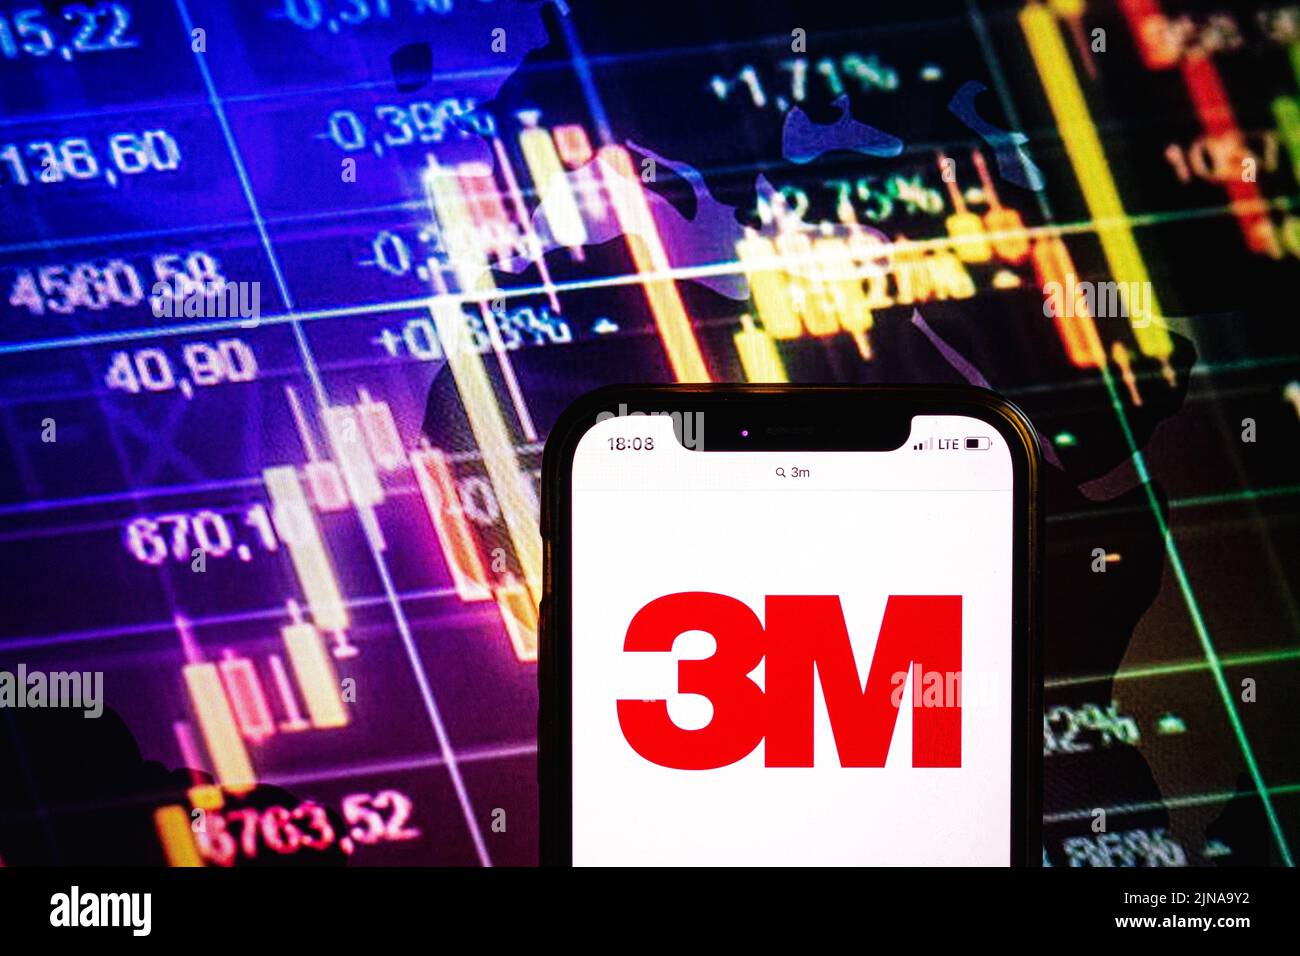 KONSKIE, POLAND - August 09, 2022: Smartphone displaying logo of 3M company on stock exchange diagram background Stock Photo